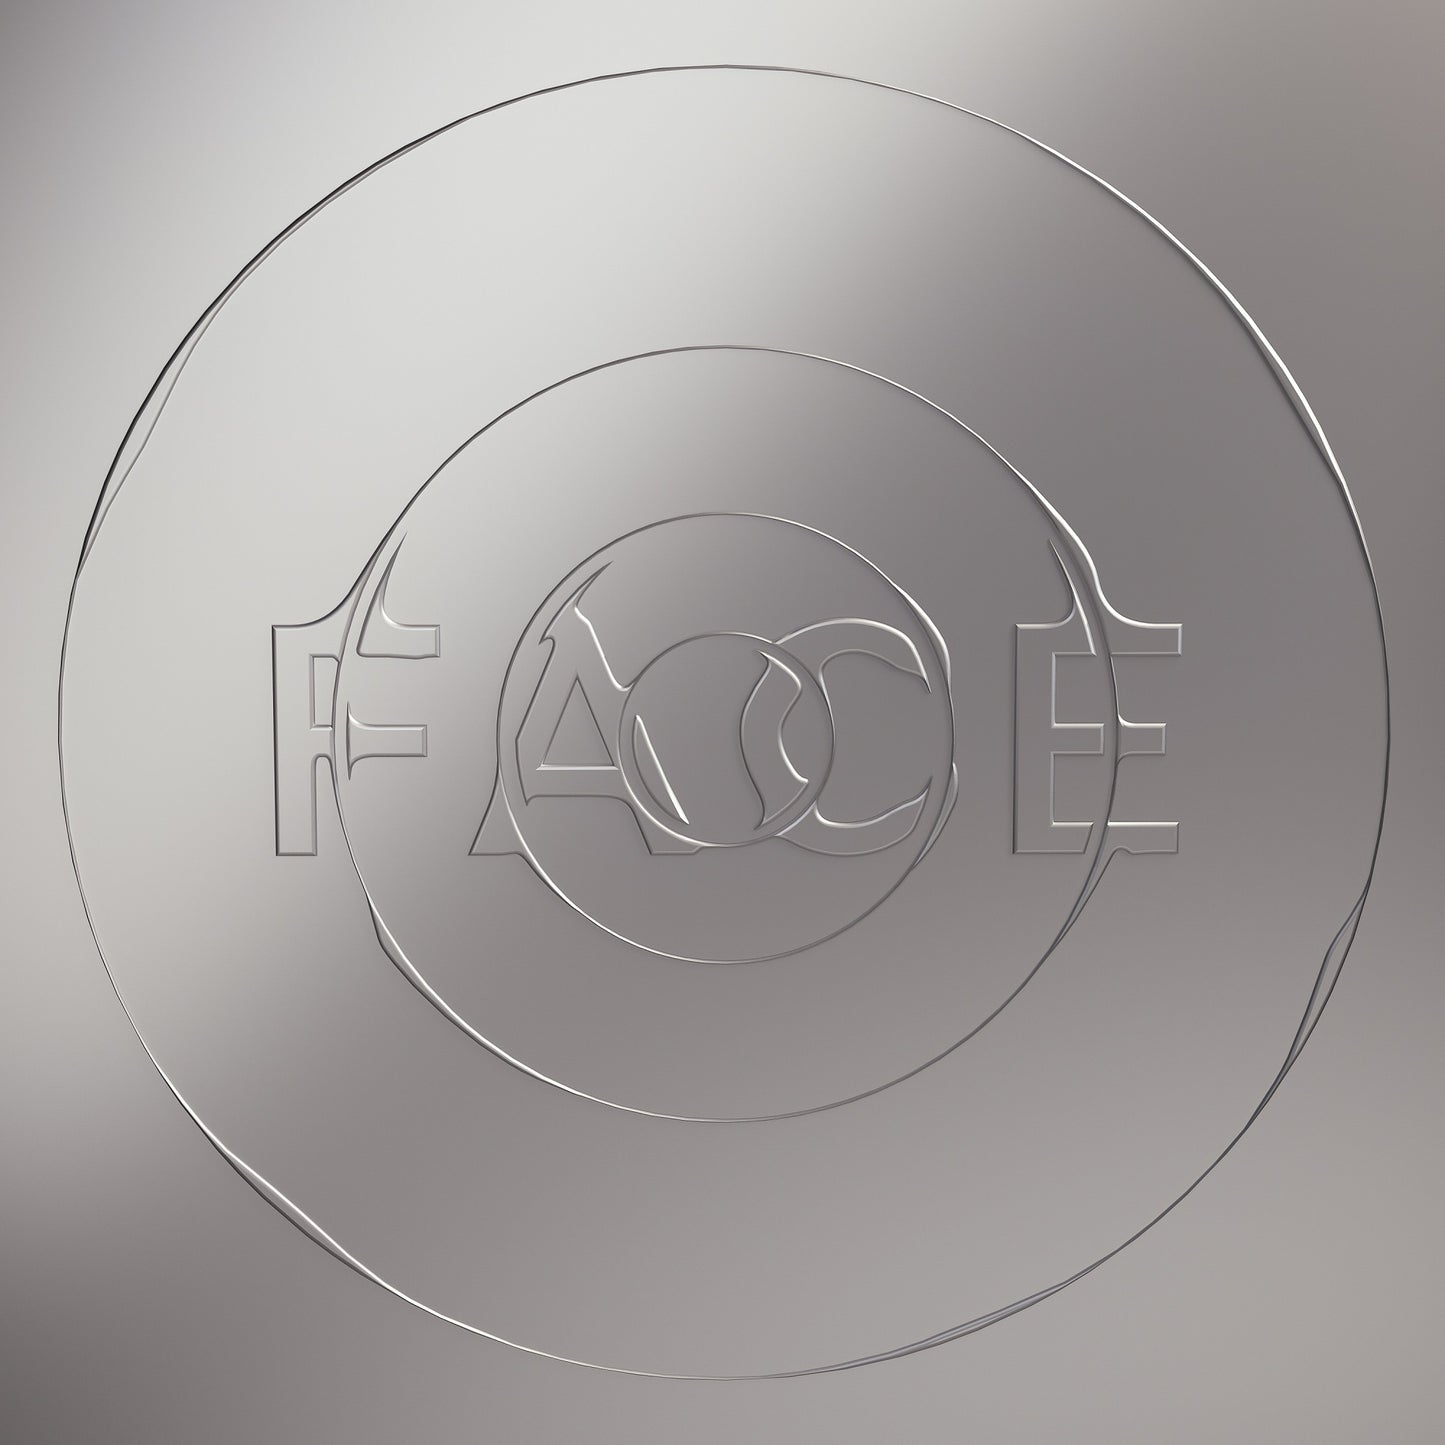 K-Pop CD Jimin (BTS) - Debut Studio Album 'Face'